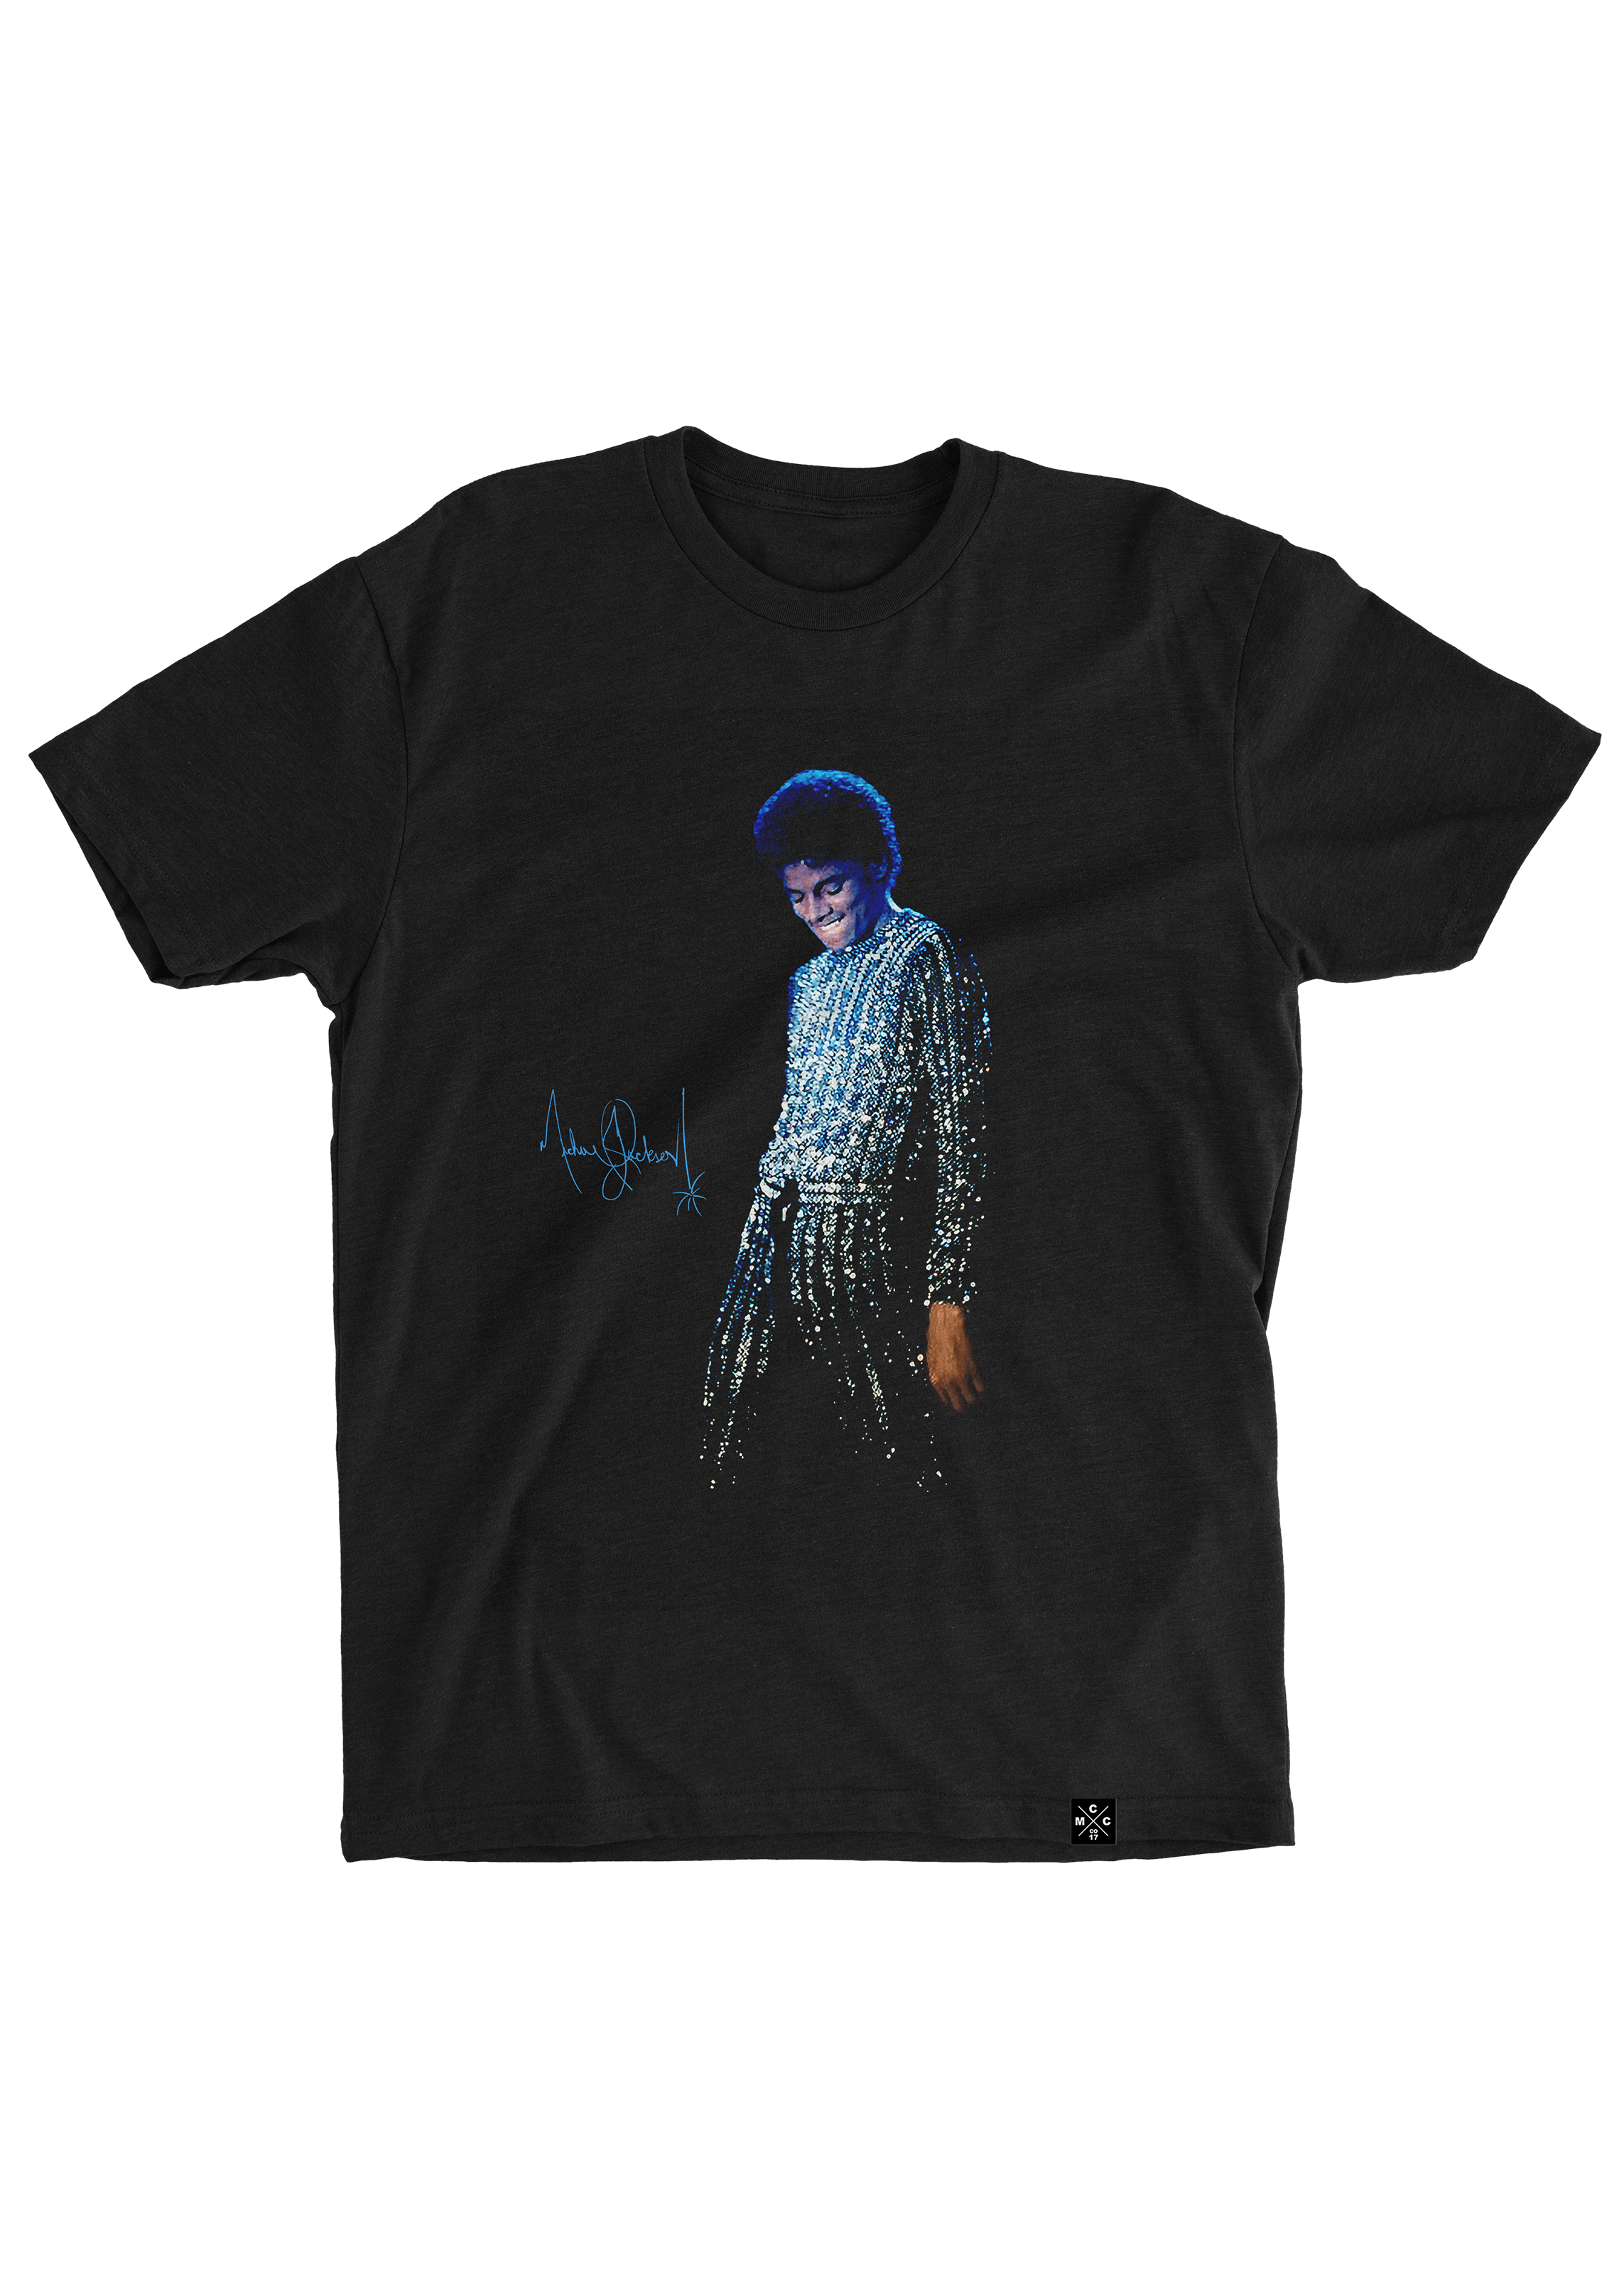 Miles Carter Designs Shirt S Michael Jackson Rock With You